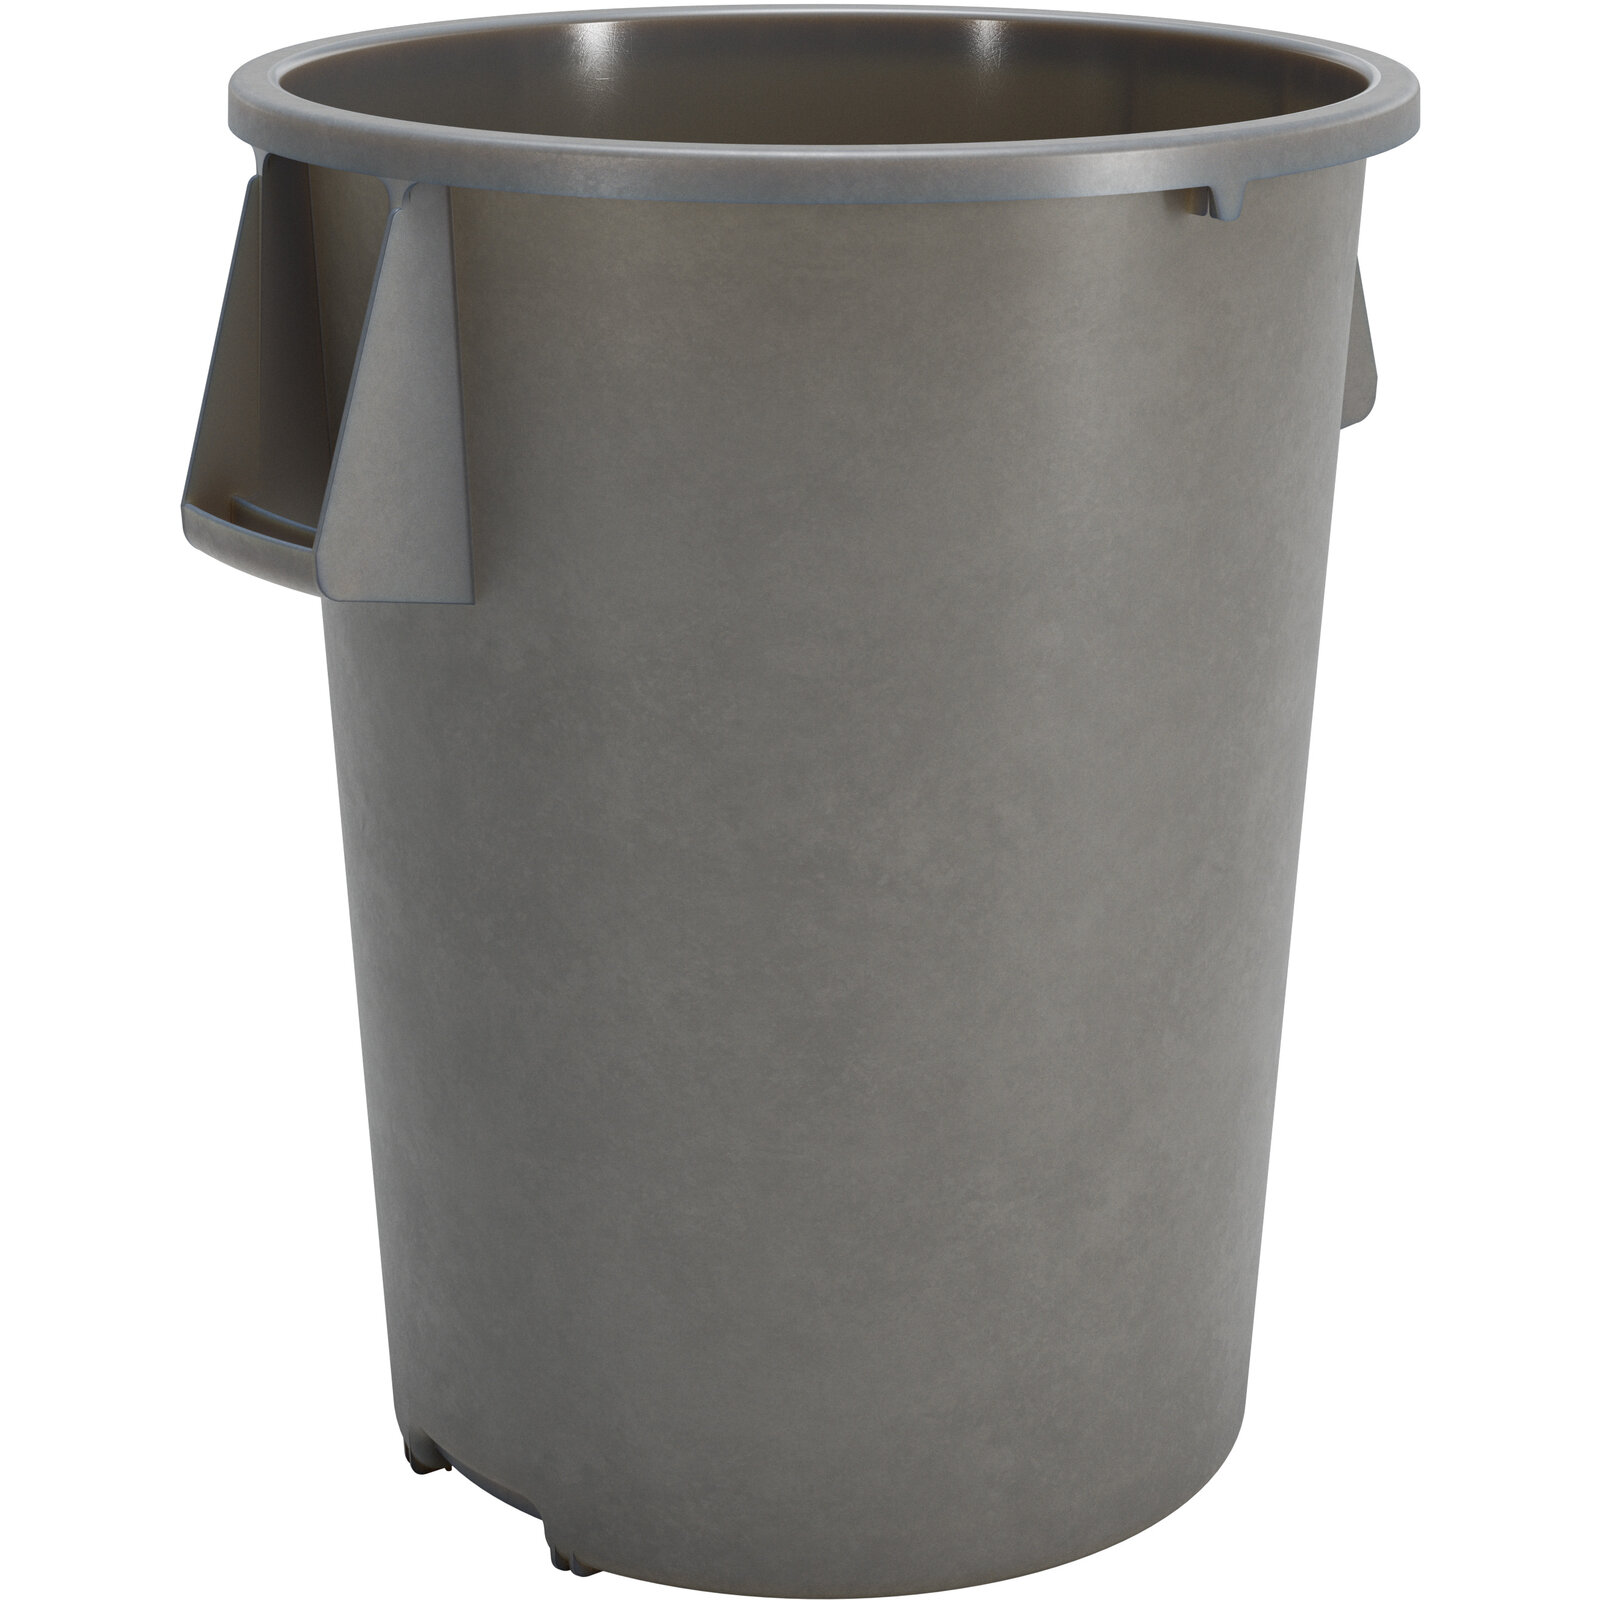 Carlisle Centurian 22 Gallon Tall Round Trash Can, Gray